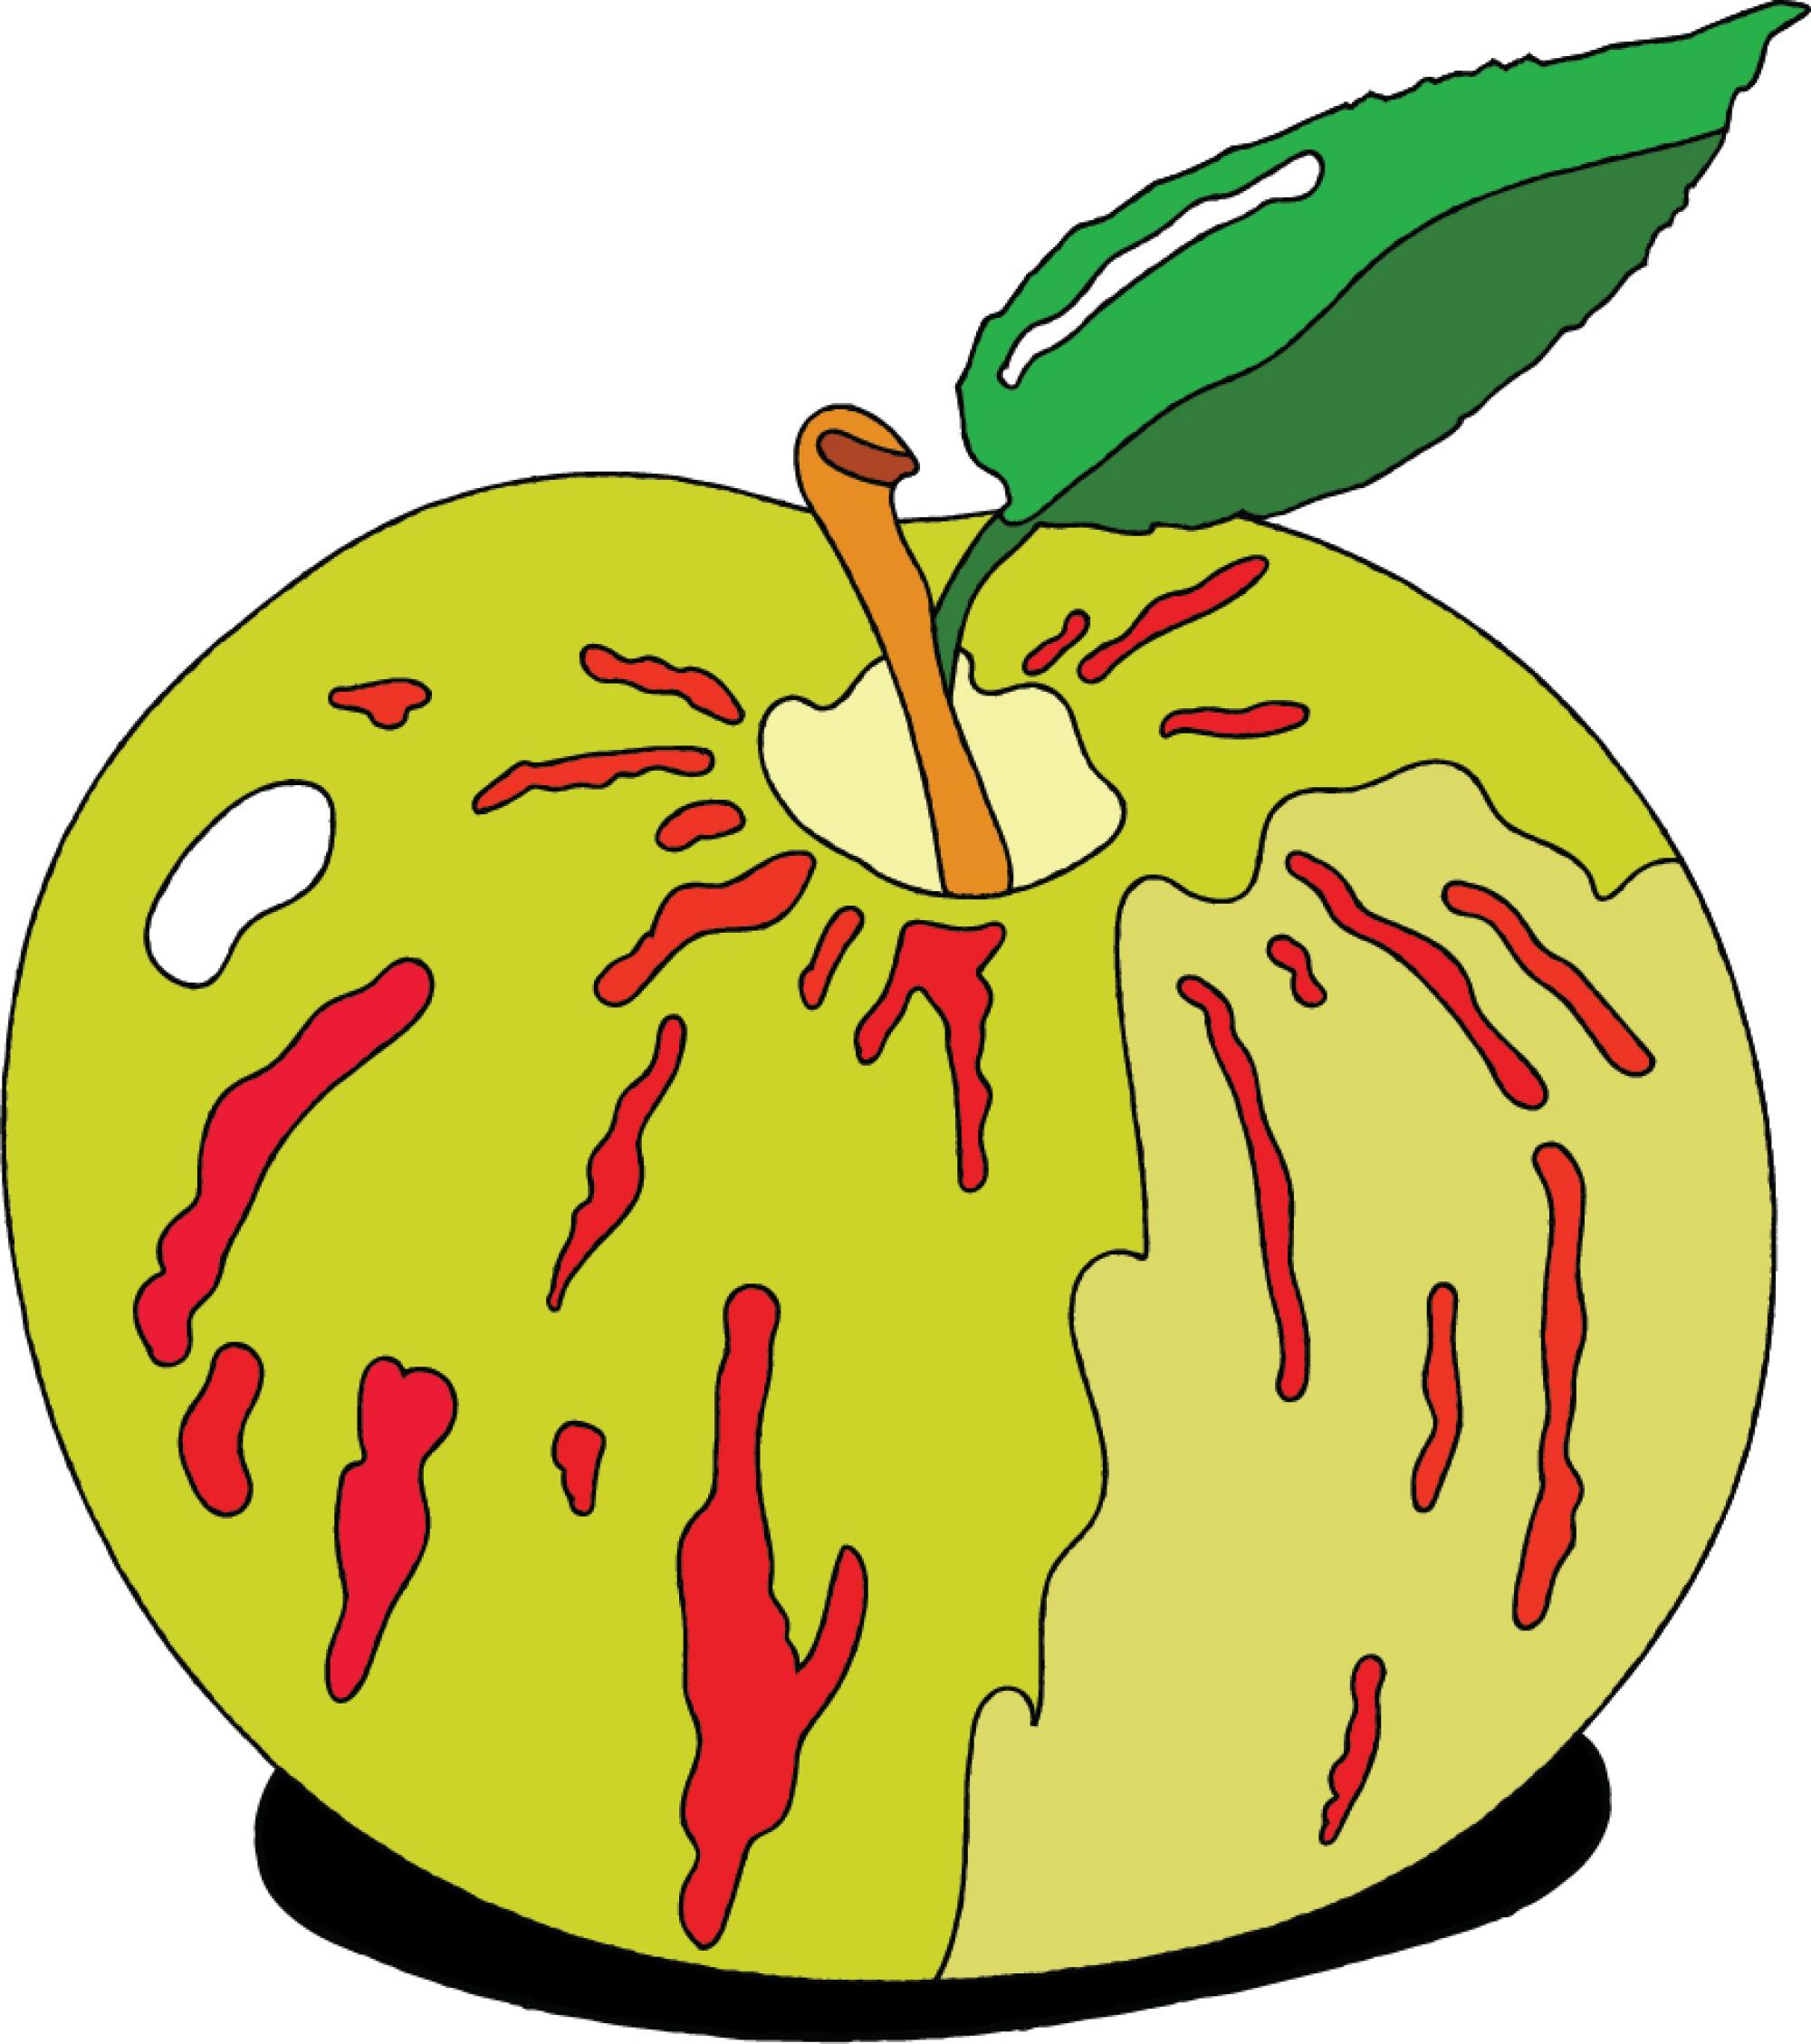 An illustration of an apple